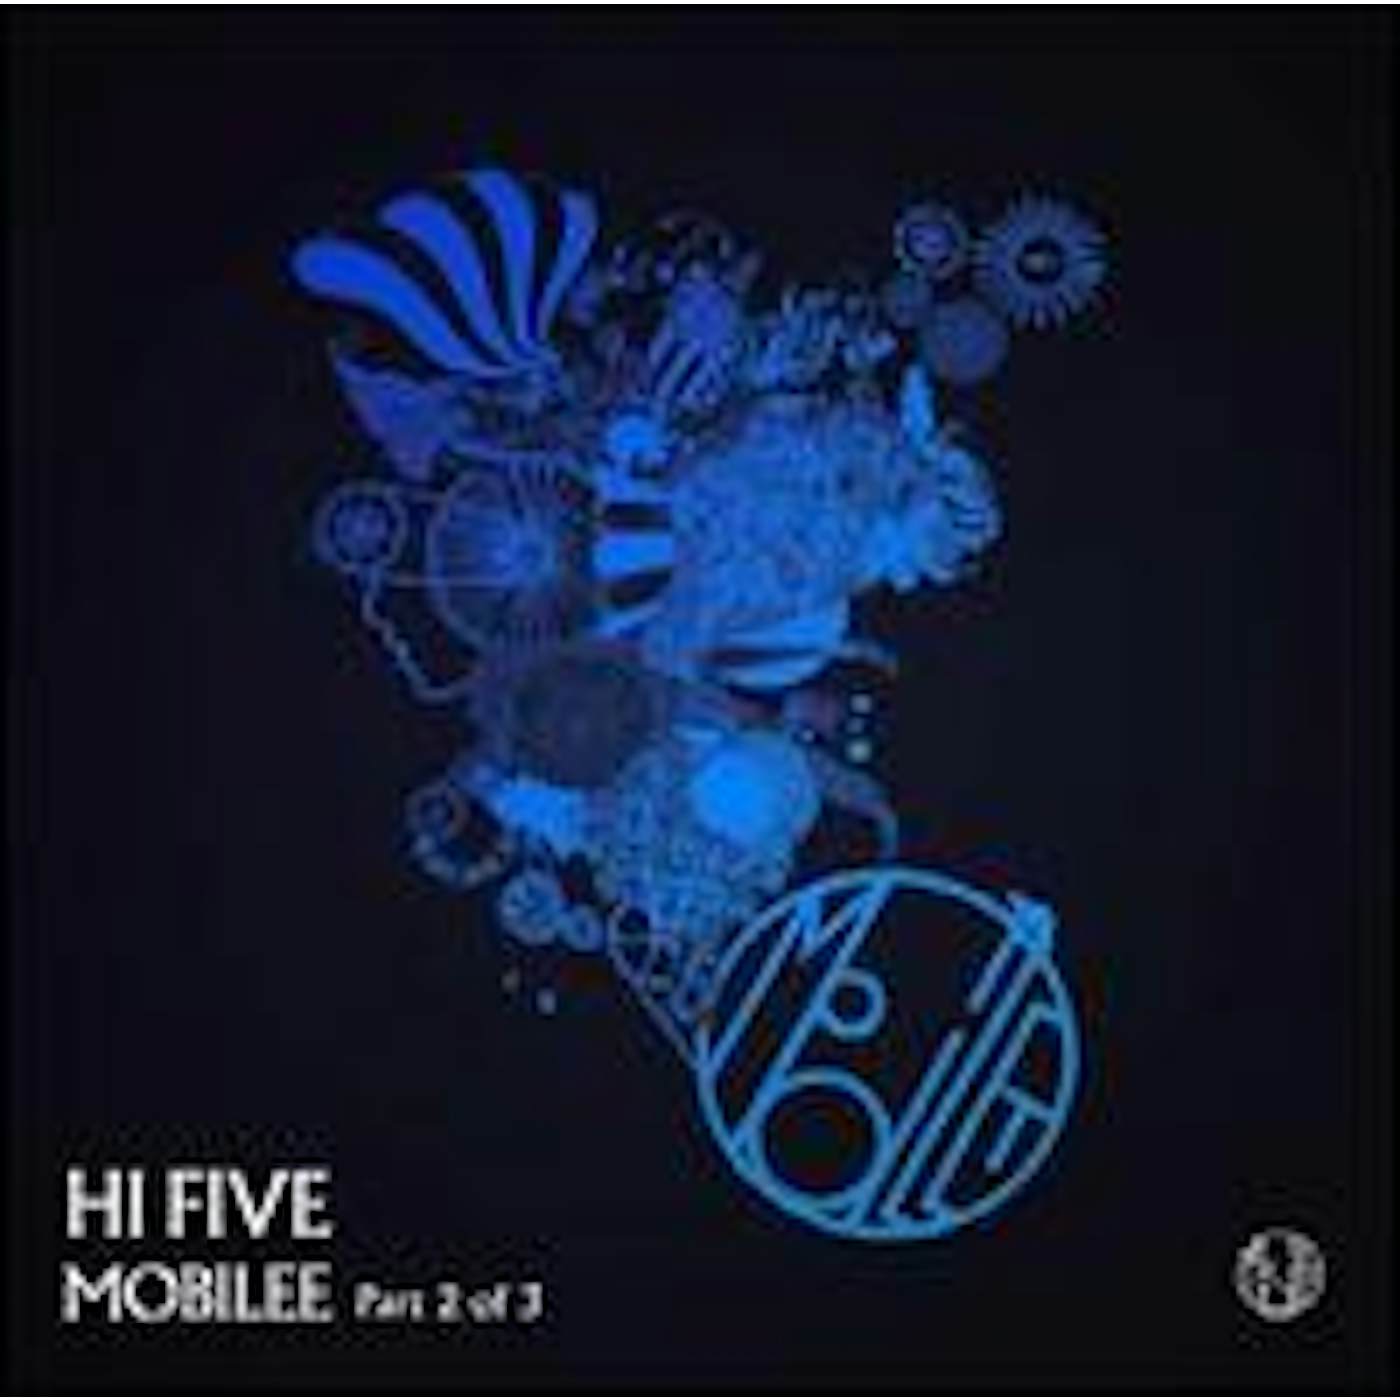 Daniel Stefanik / Marcin Czubala HI FIVE MOBILEE 2 OF 3 Vinyl Record